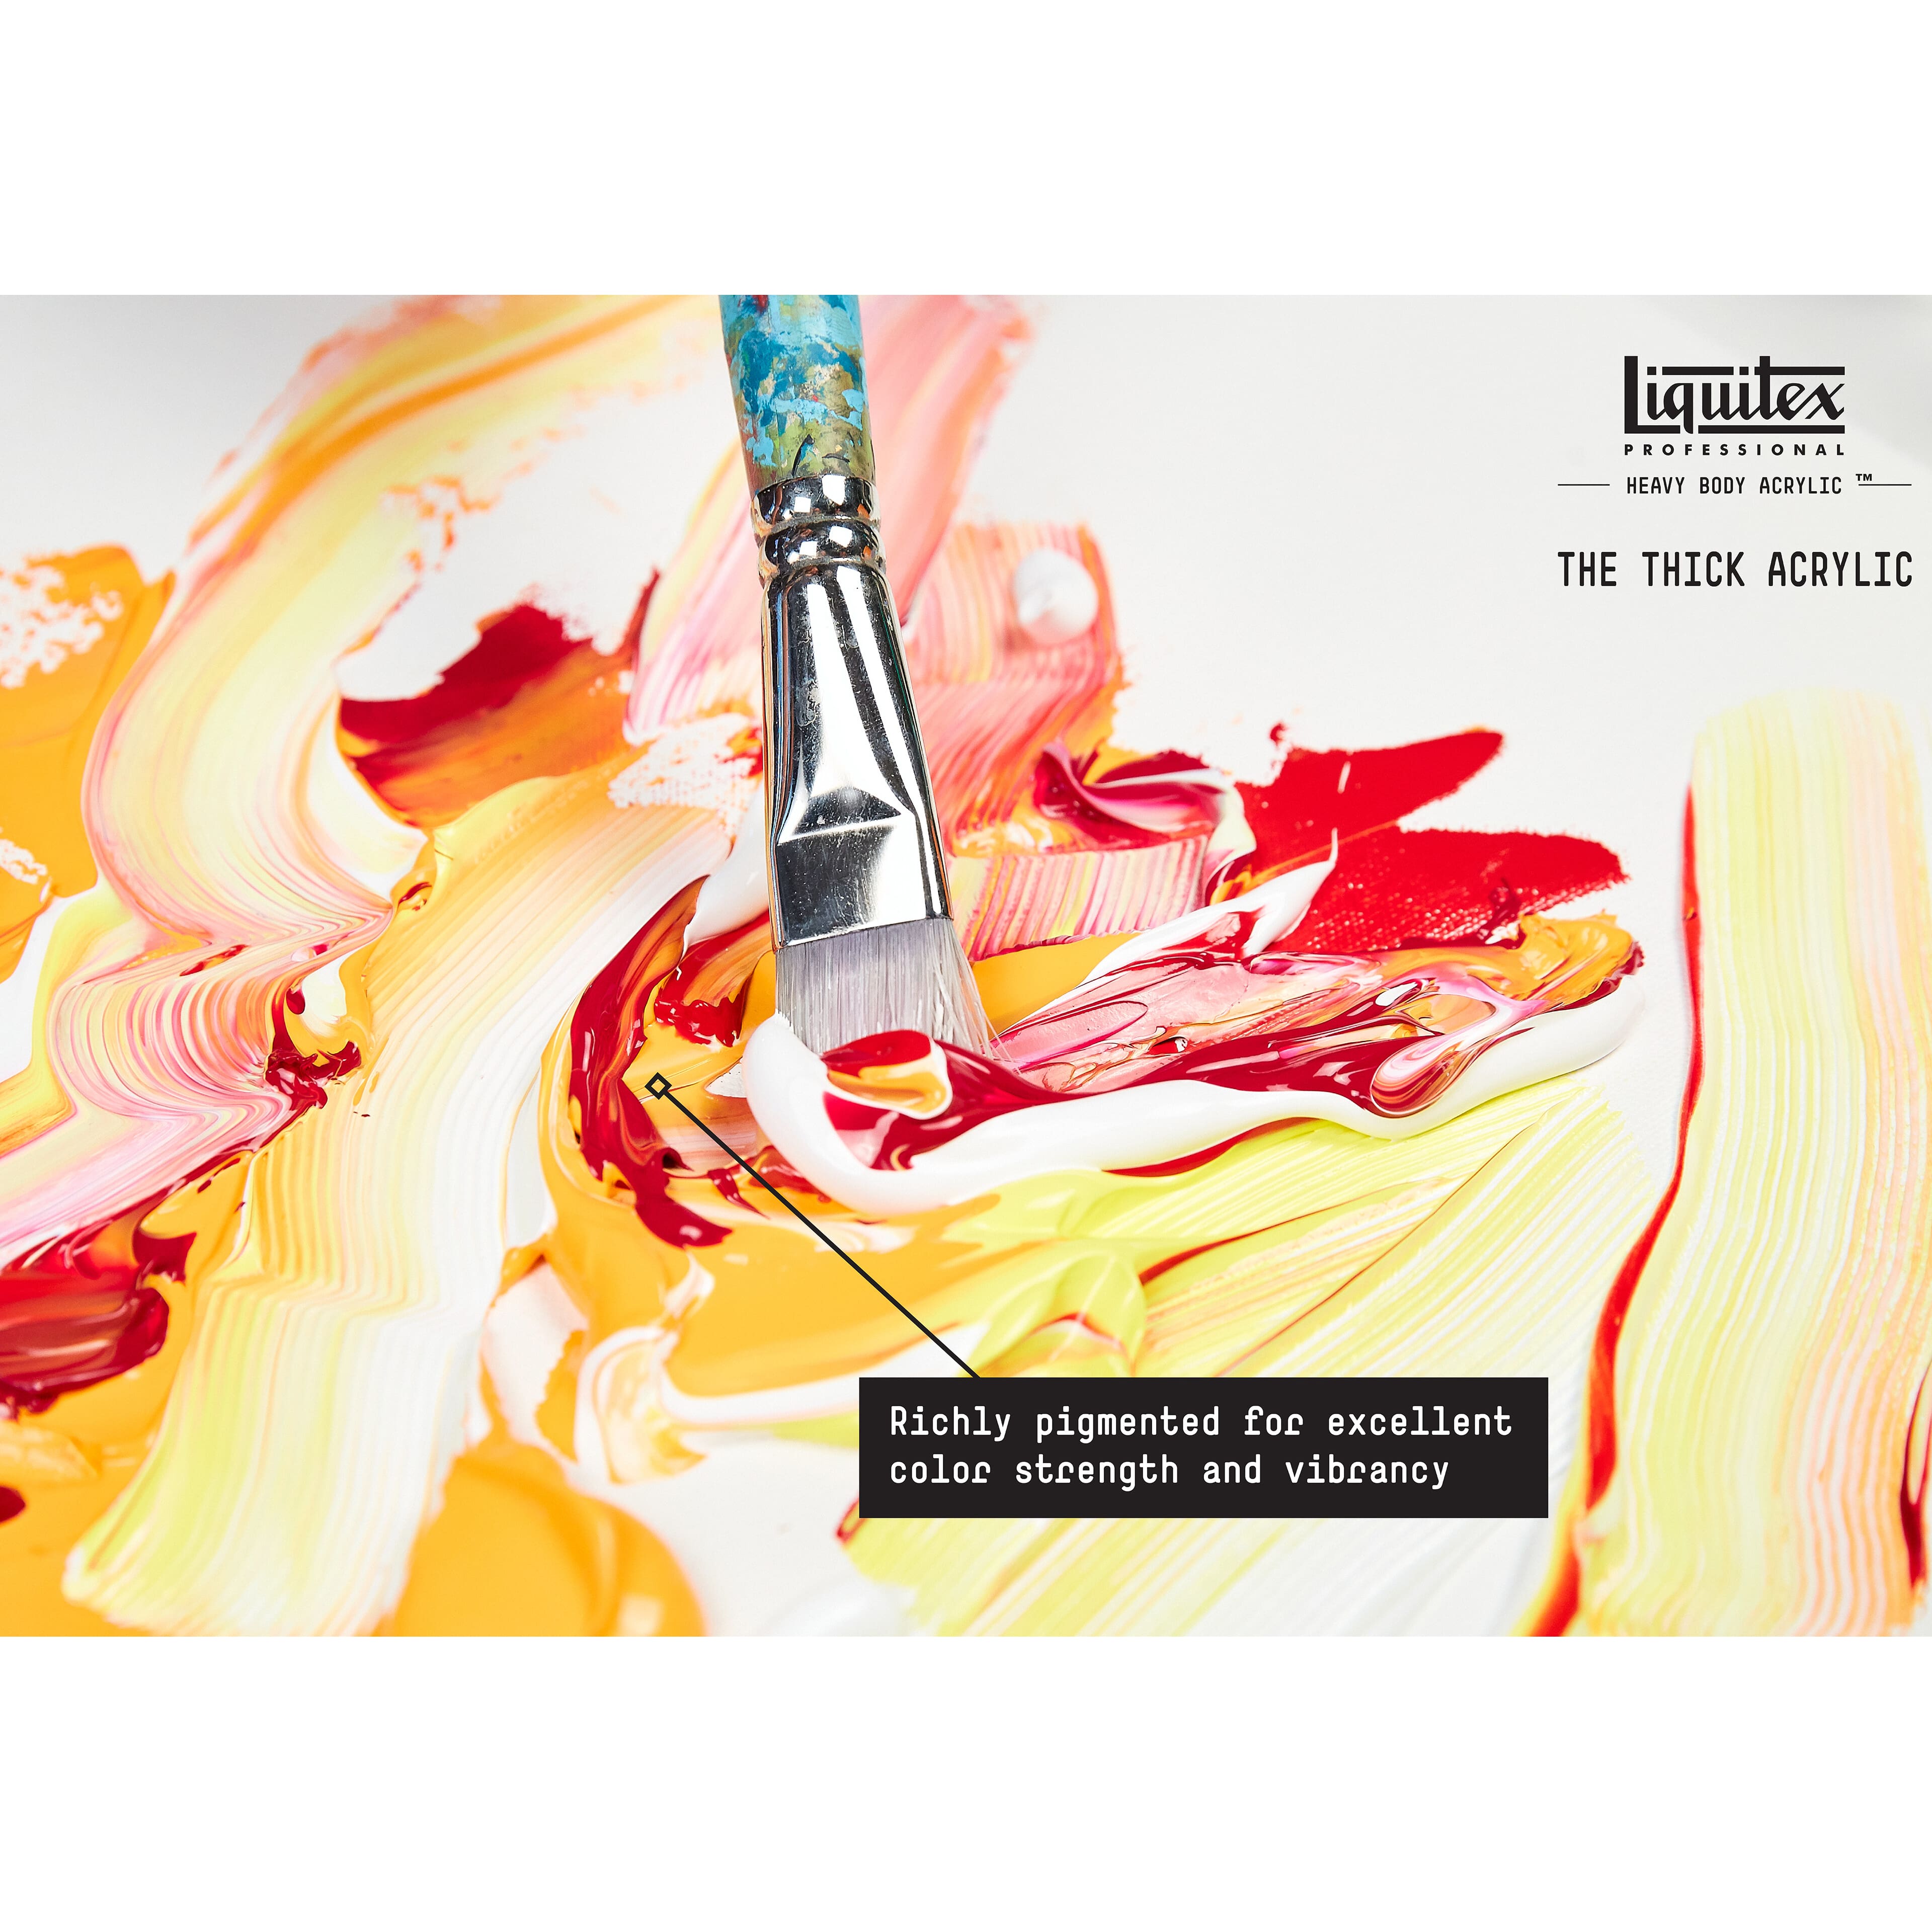 Liquitex : Professional Heavy Body Paint Sets - Acrylic Sets